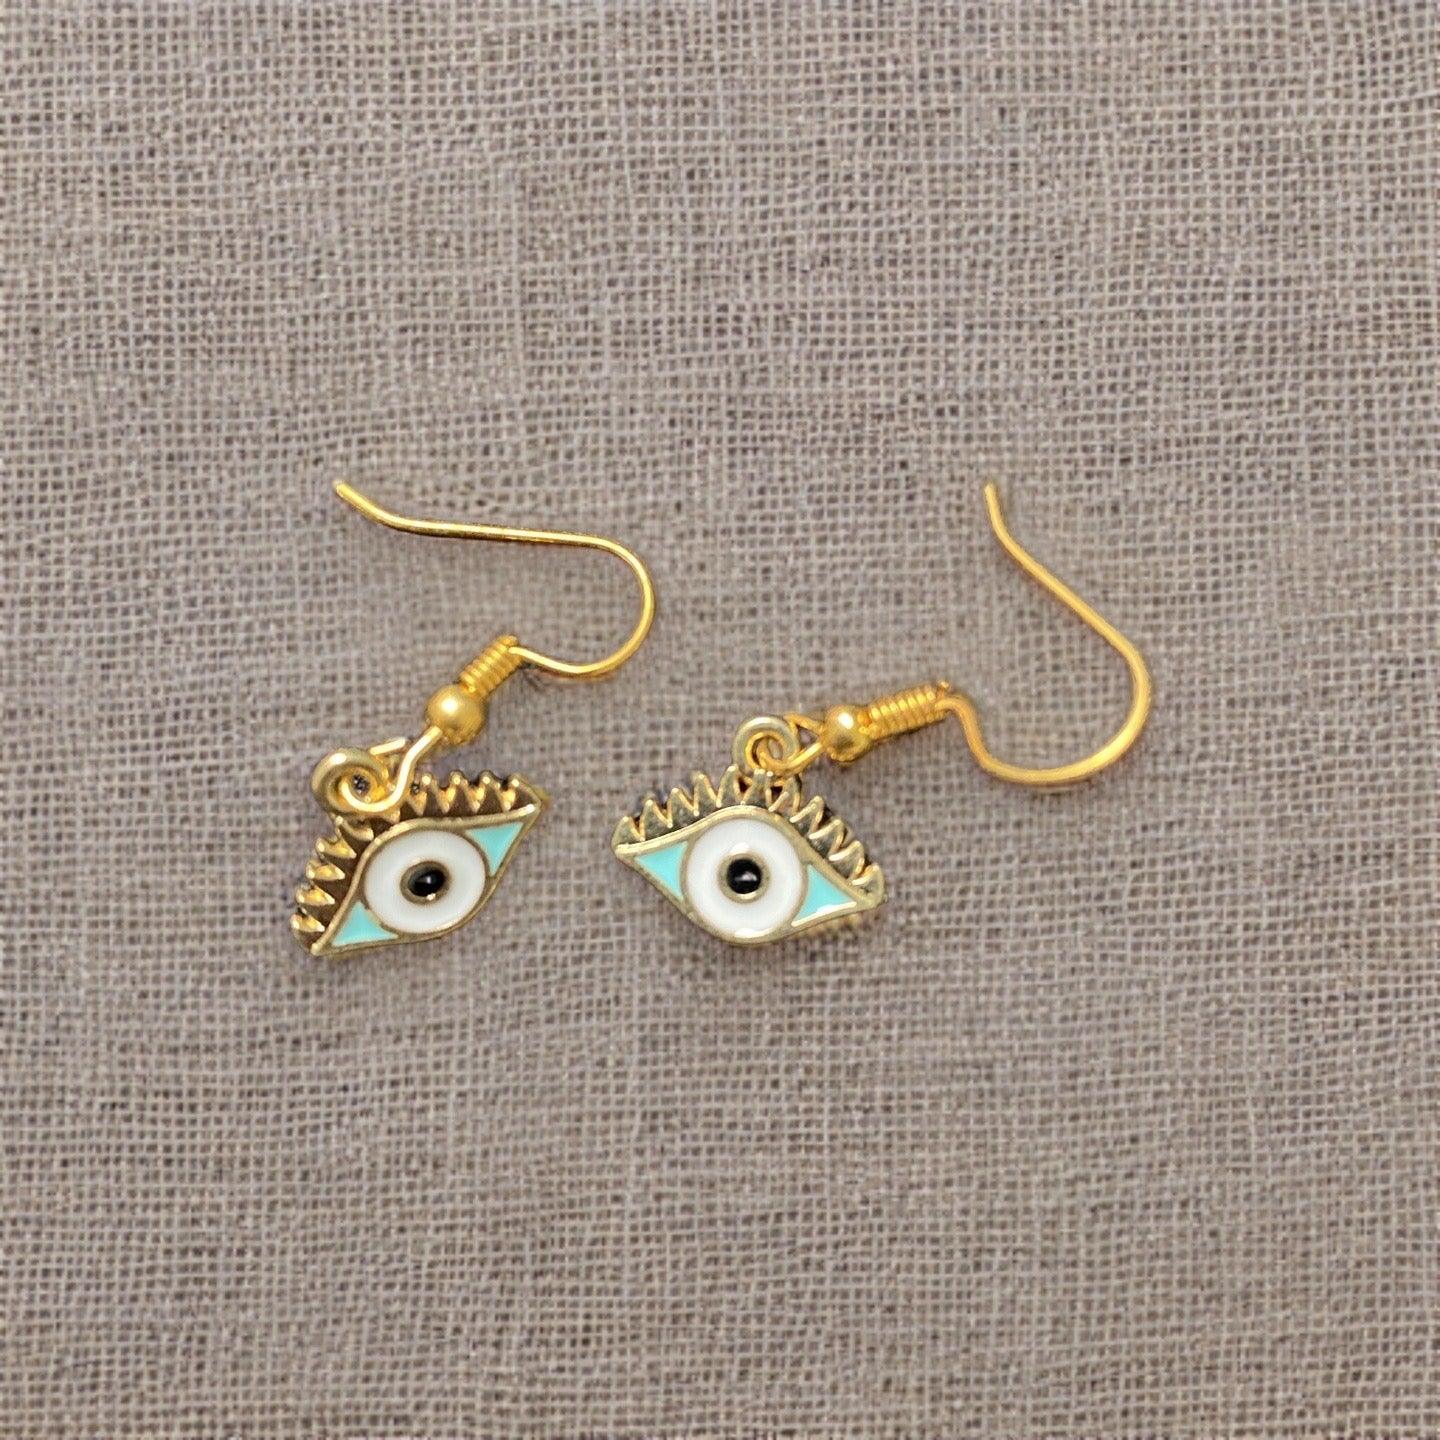 Beads Jewellery | Handmade Earrings for Women